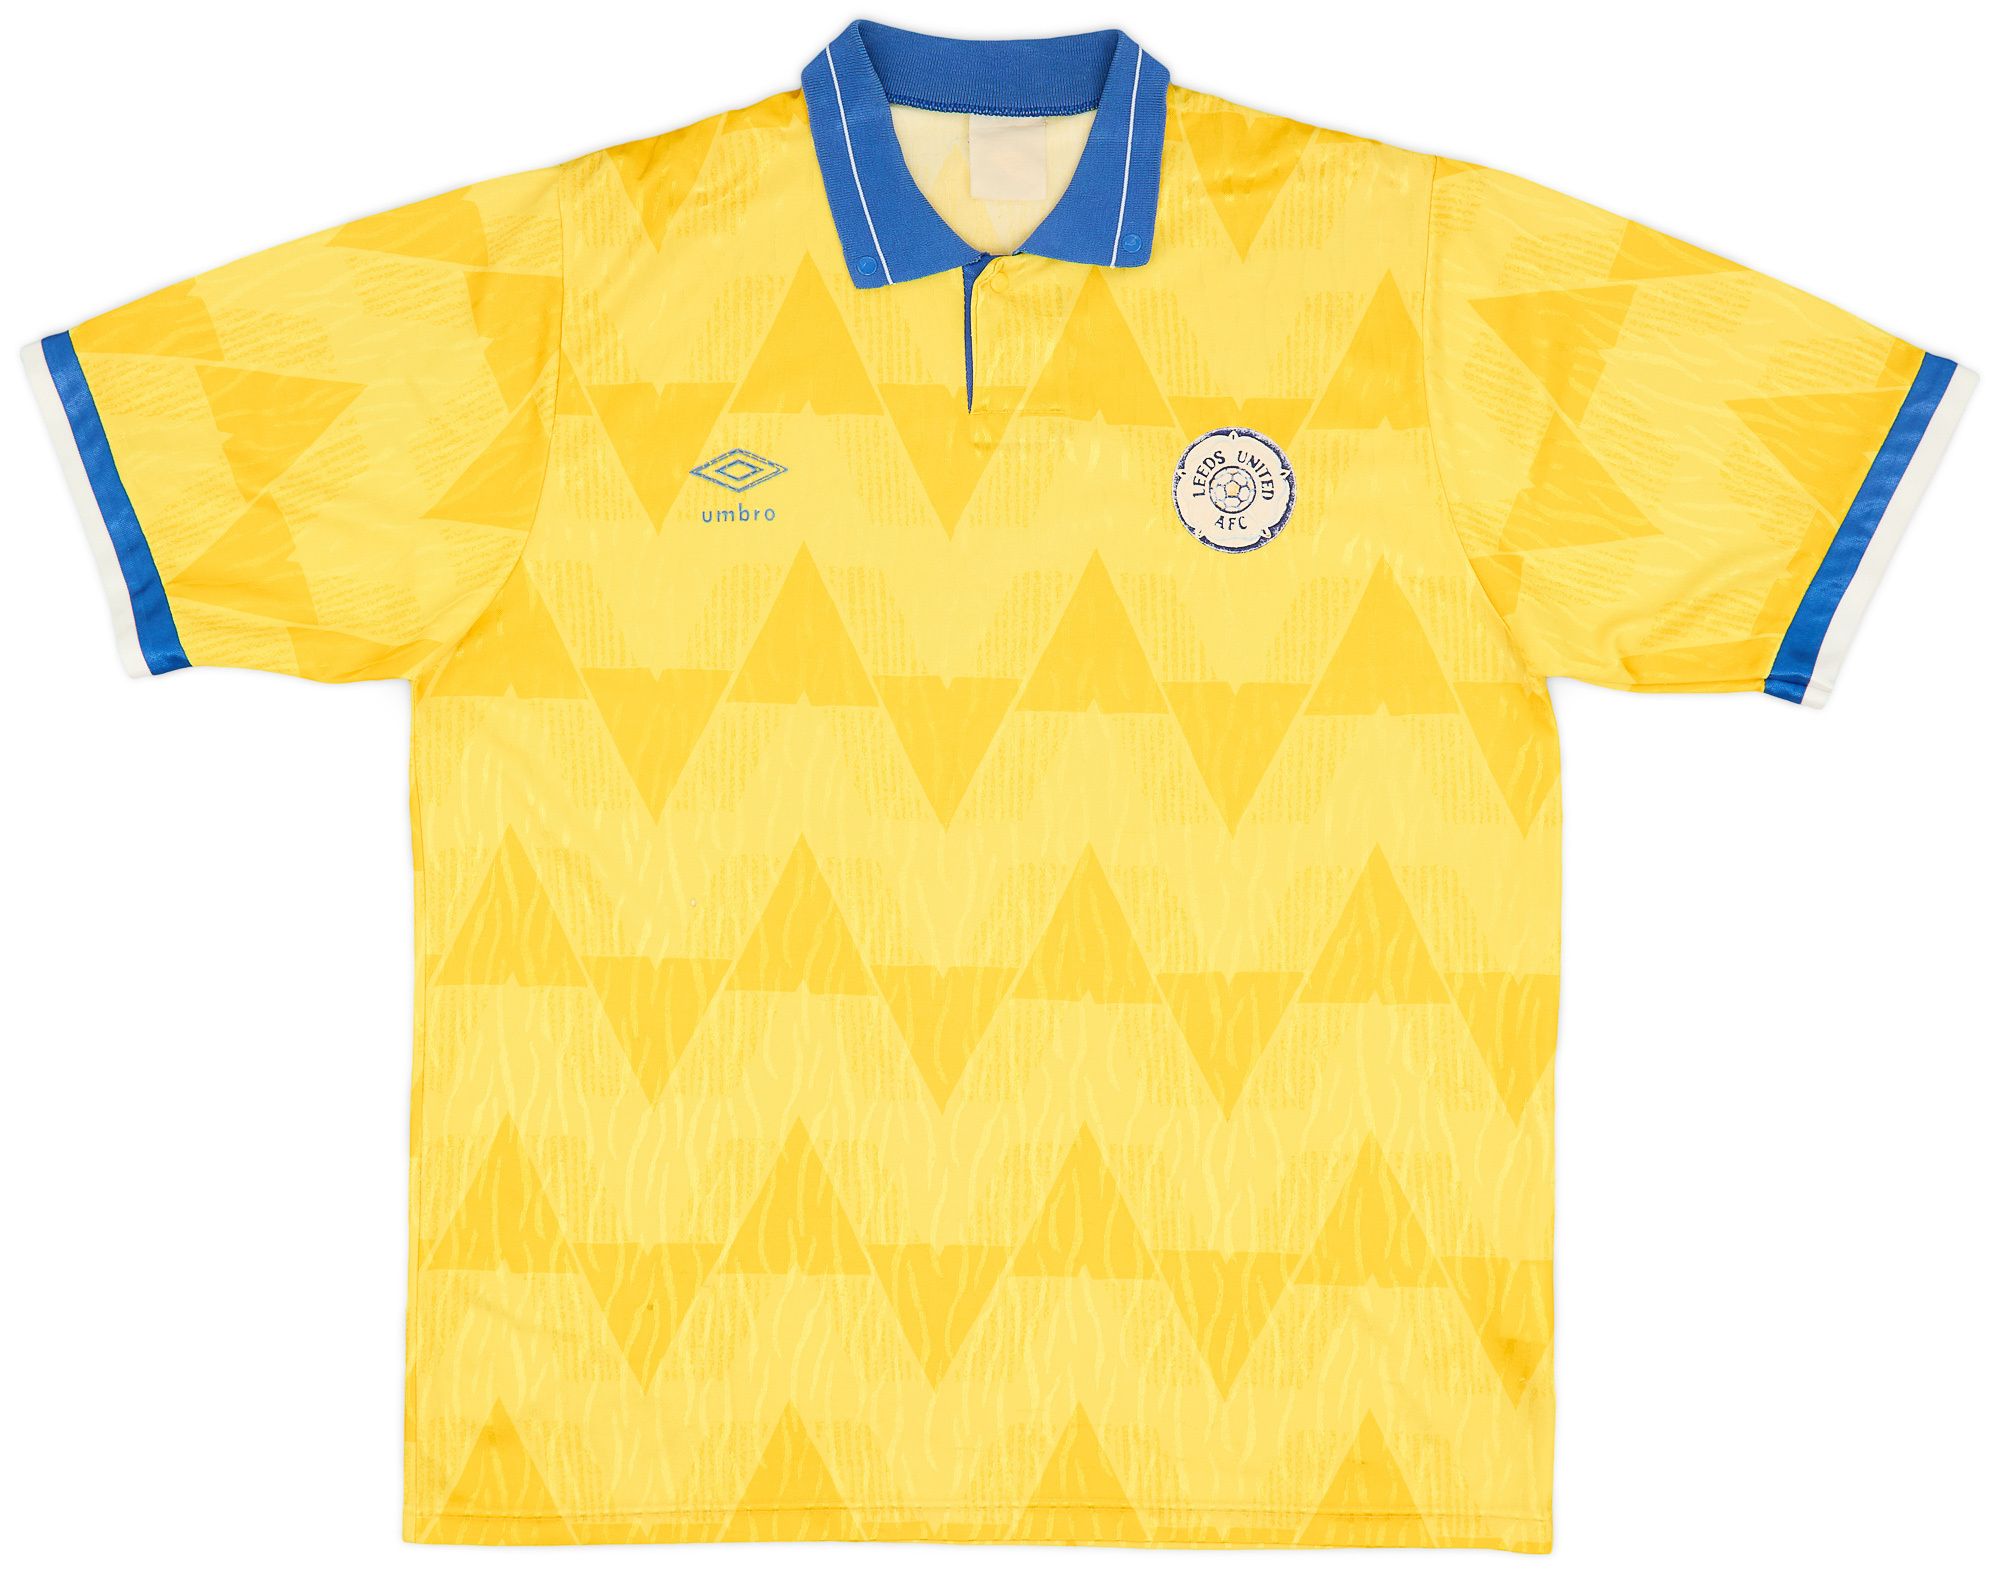 1989-91 Leeds United Away Shirt - 5/10 - ()